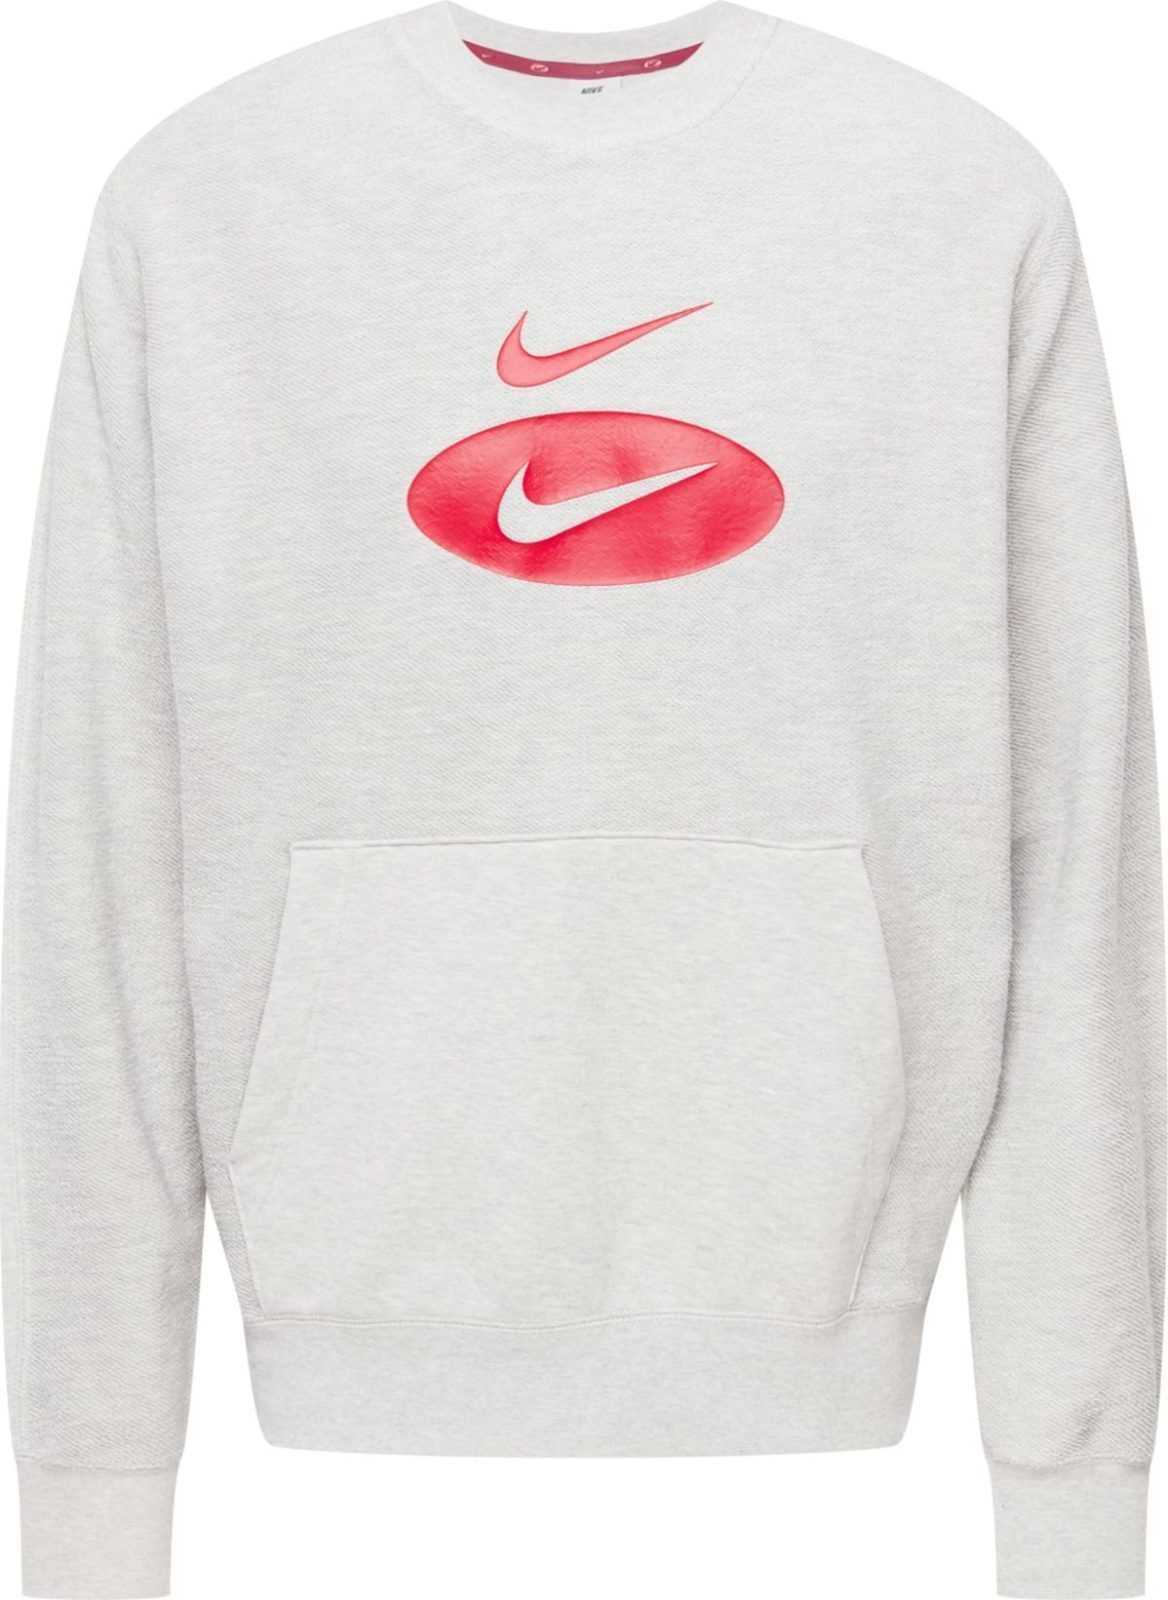 Nike Sportswear Mikina šedý melír / červená